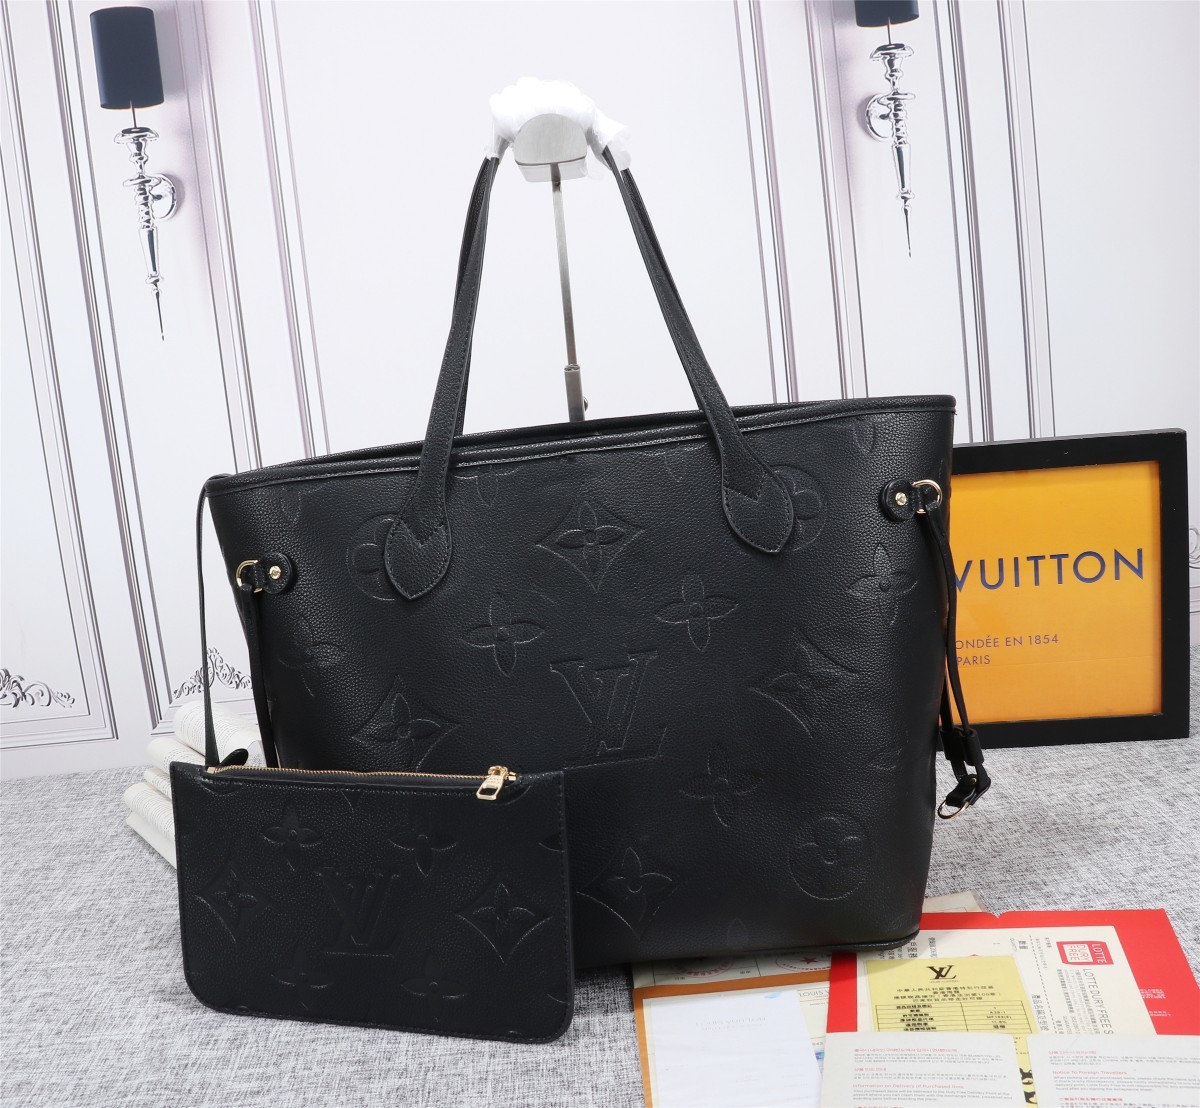 Louis Vuitton Neverfull MM Sunrise Pastel Handbag Summer 2022. New